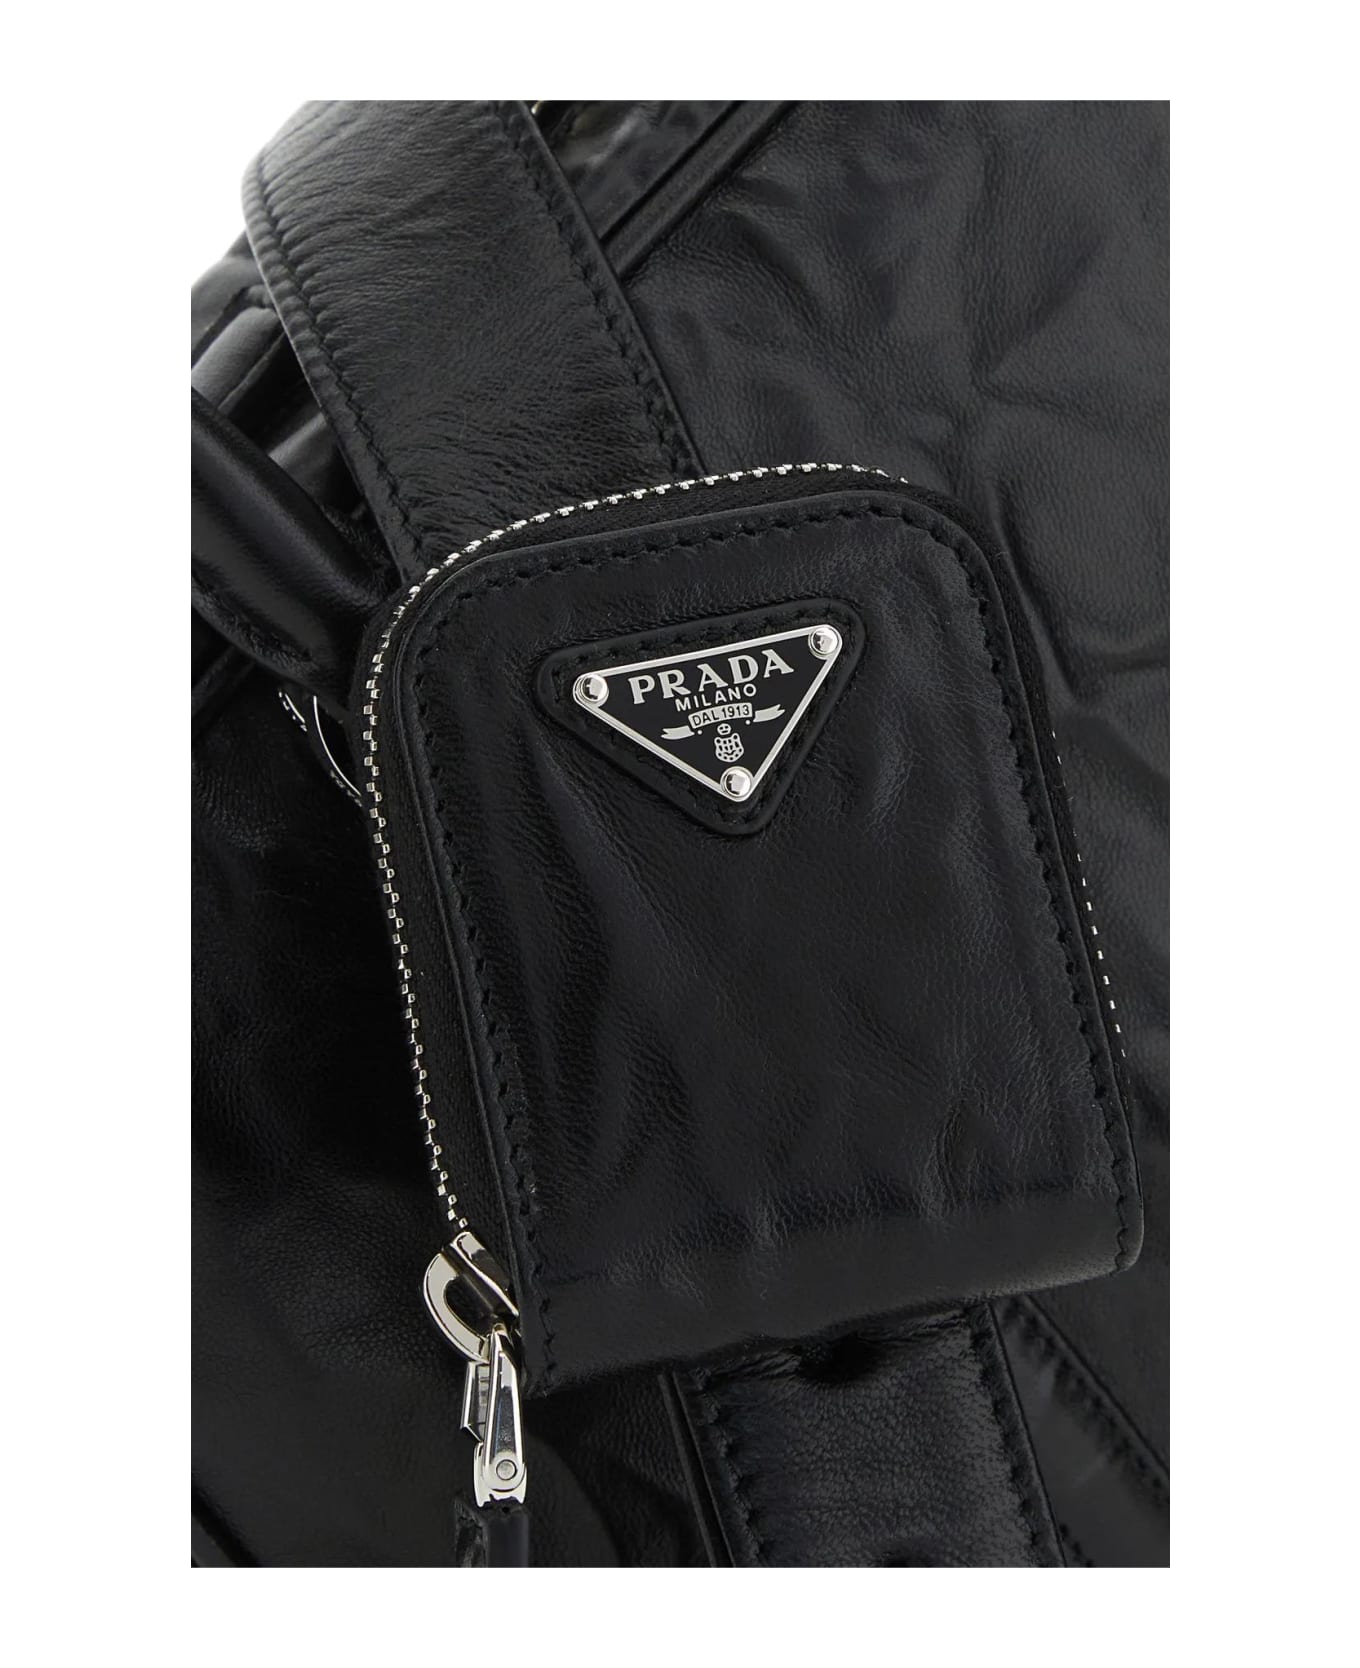 Prada Black Nappa Leather Handbag トートバッグ